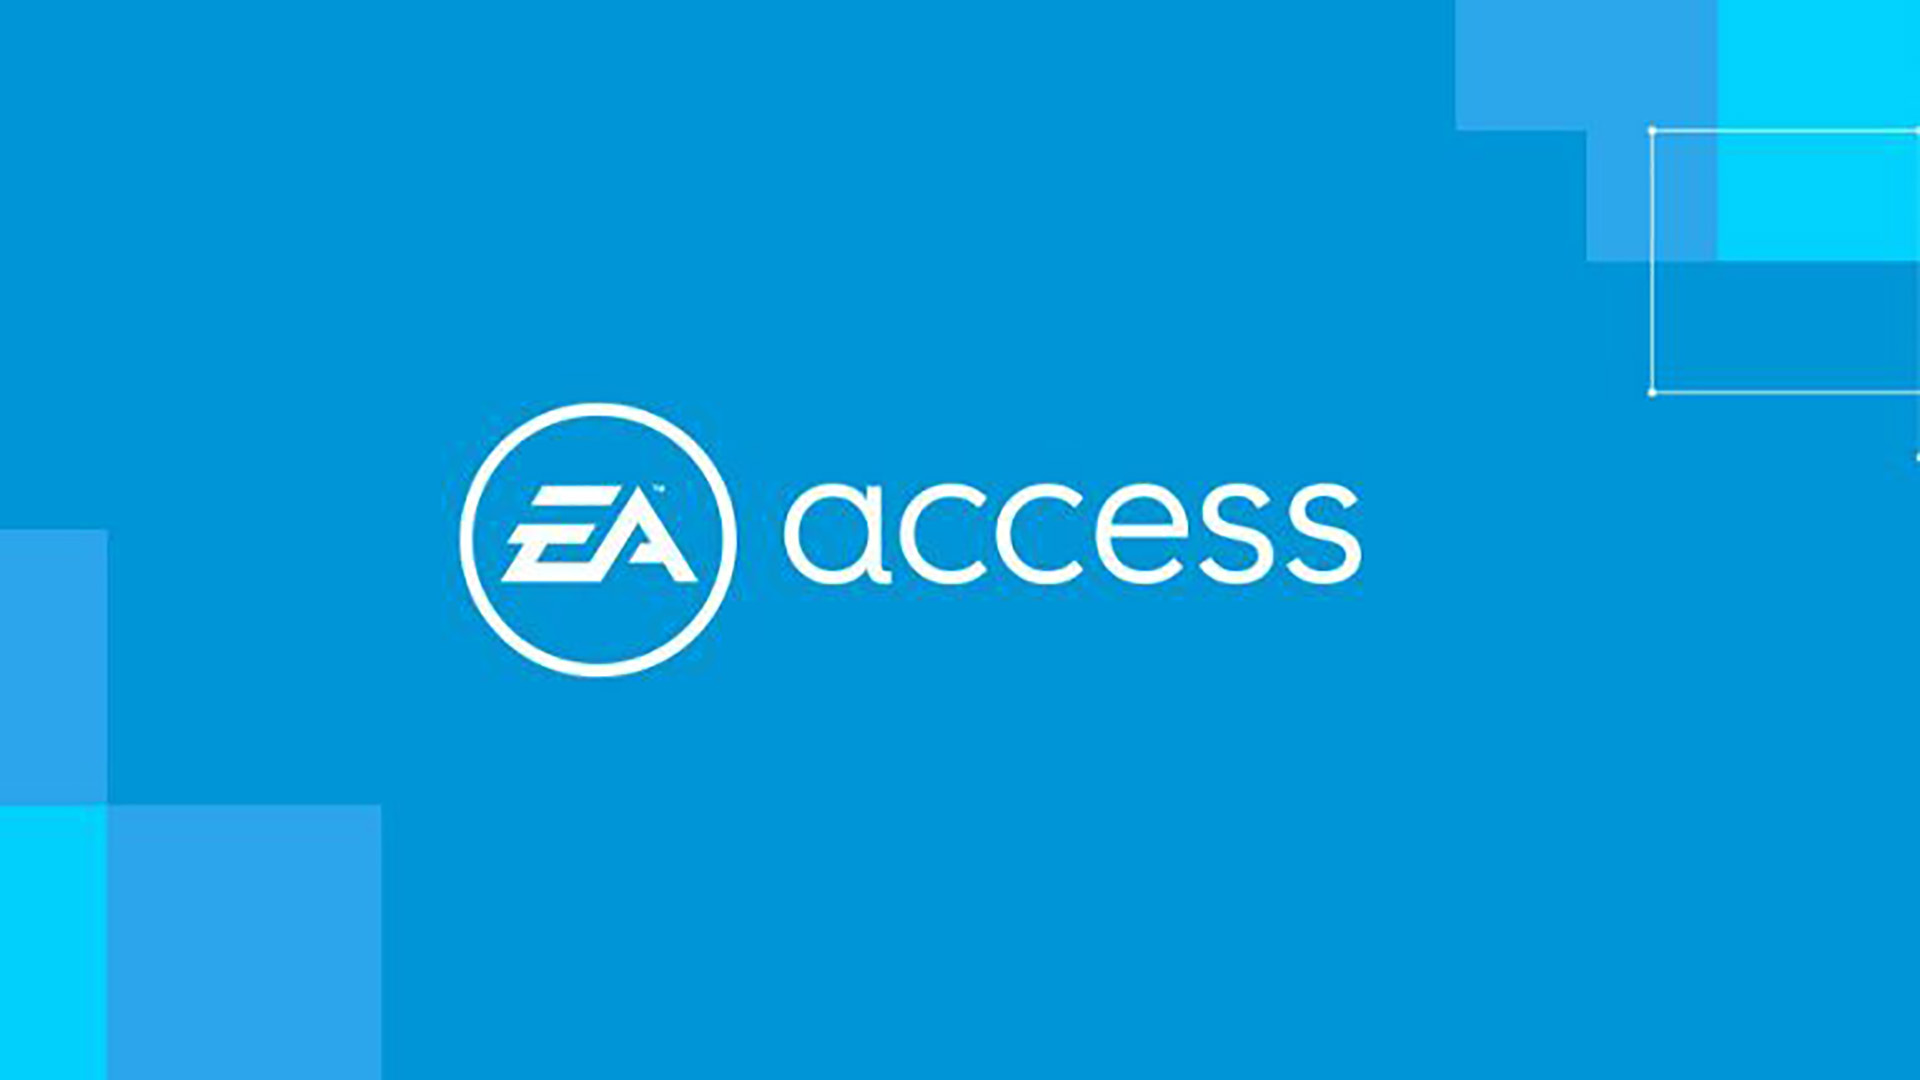 Access 12. EA access. EA access ps4. EA подписка. Подписка EA Play ps4.